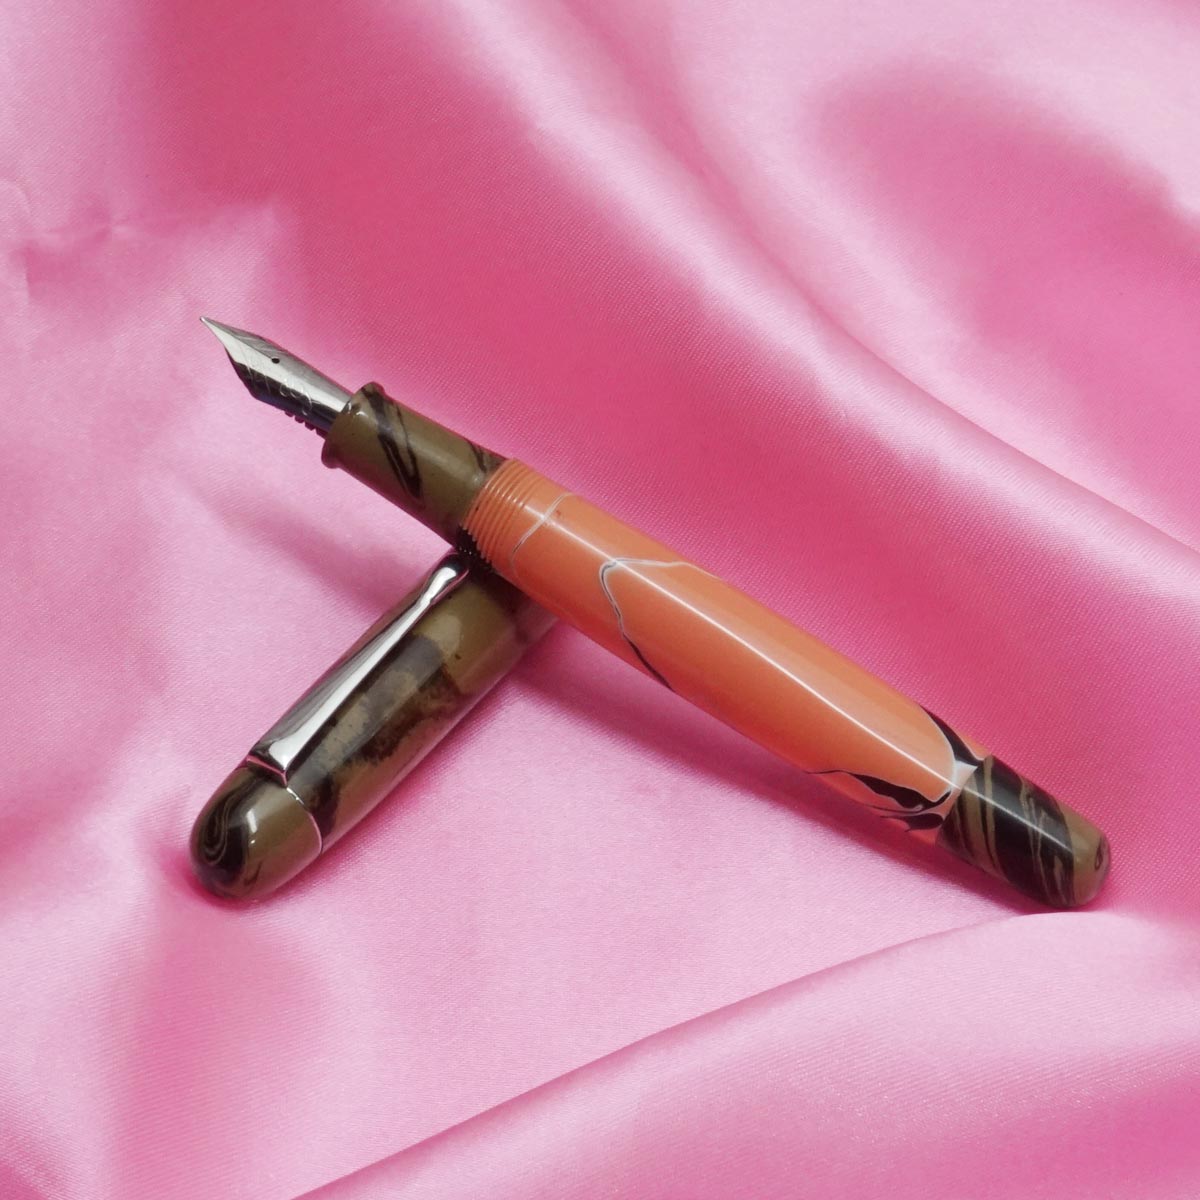 Gama Varna Ebonite Brown Cap and Orange Acrylic Body Handmade Eyedropper Model Fountain Pen with  Fine Tipped No.35 SSF Nib SKU 20372